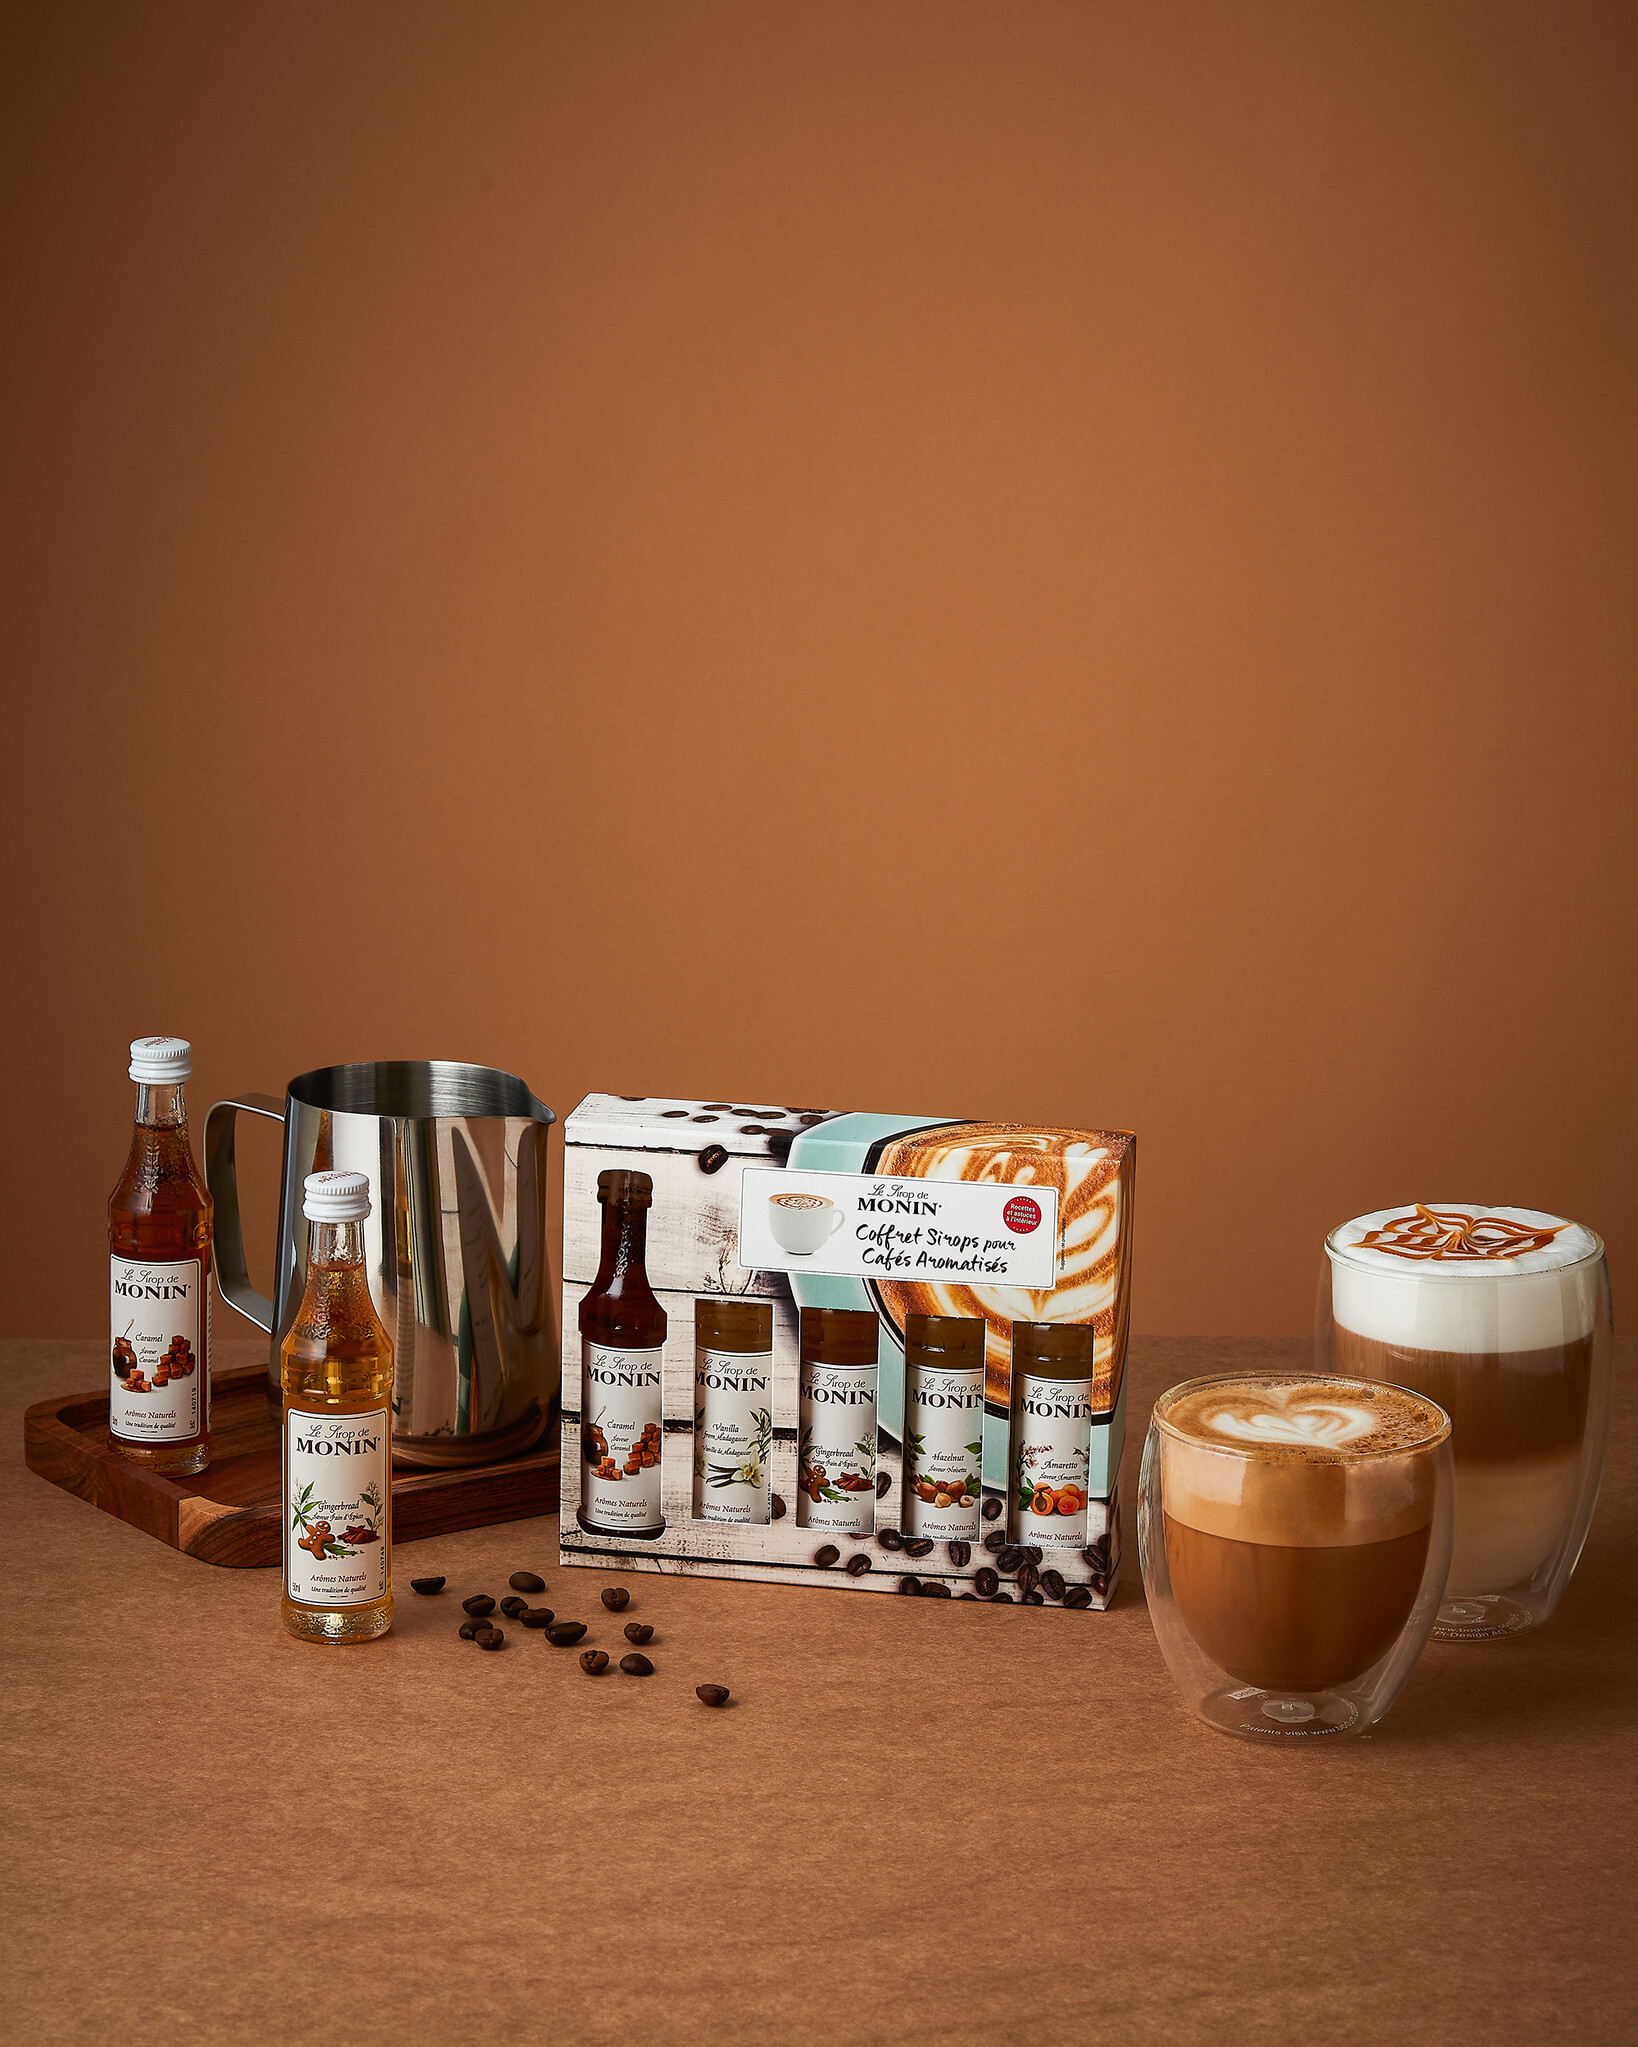 Monin 5 Syrup Coffee Collection 50 ml c/u